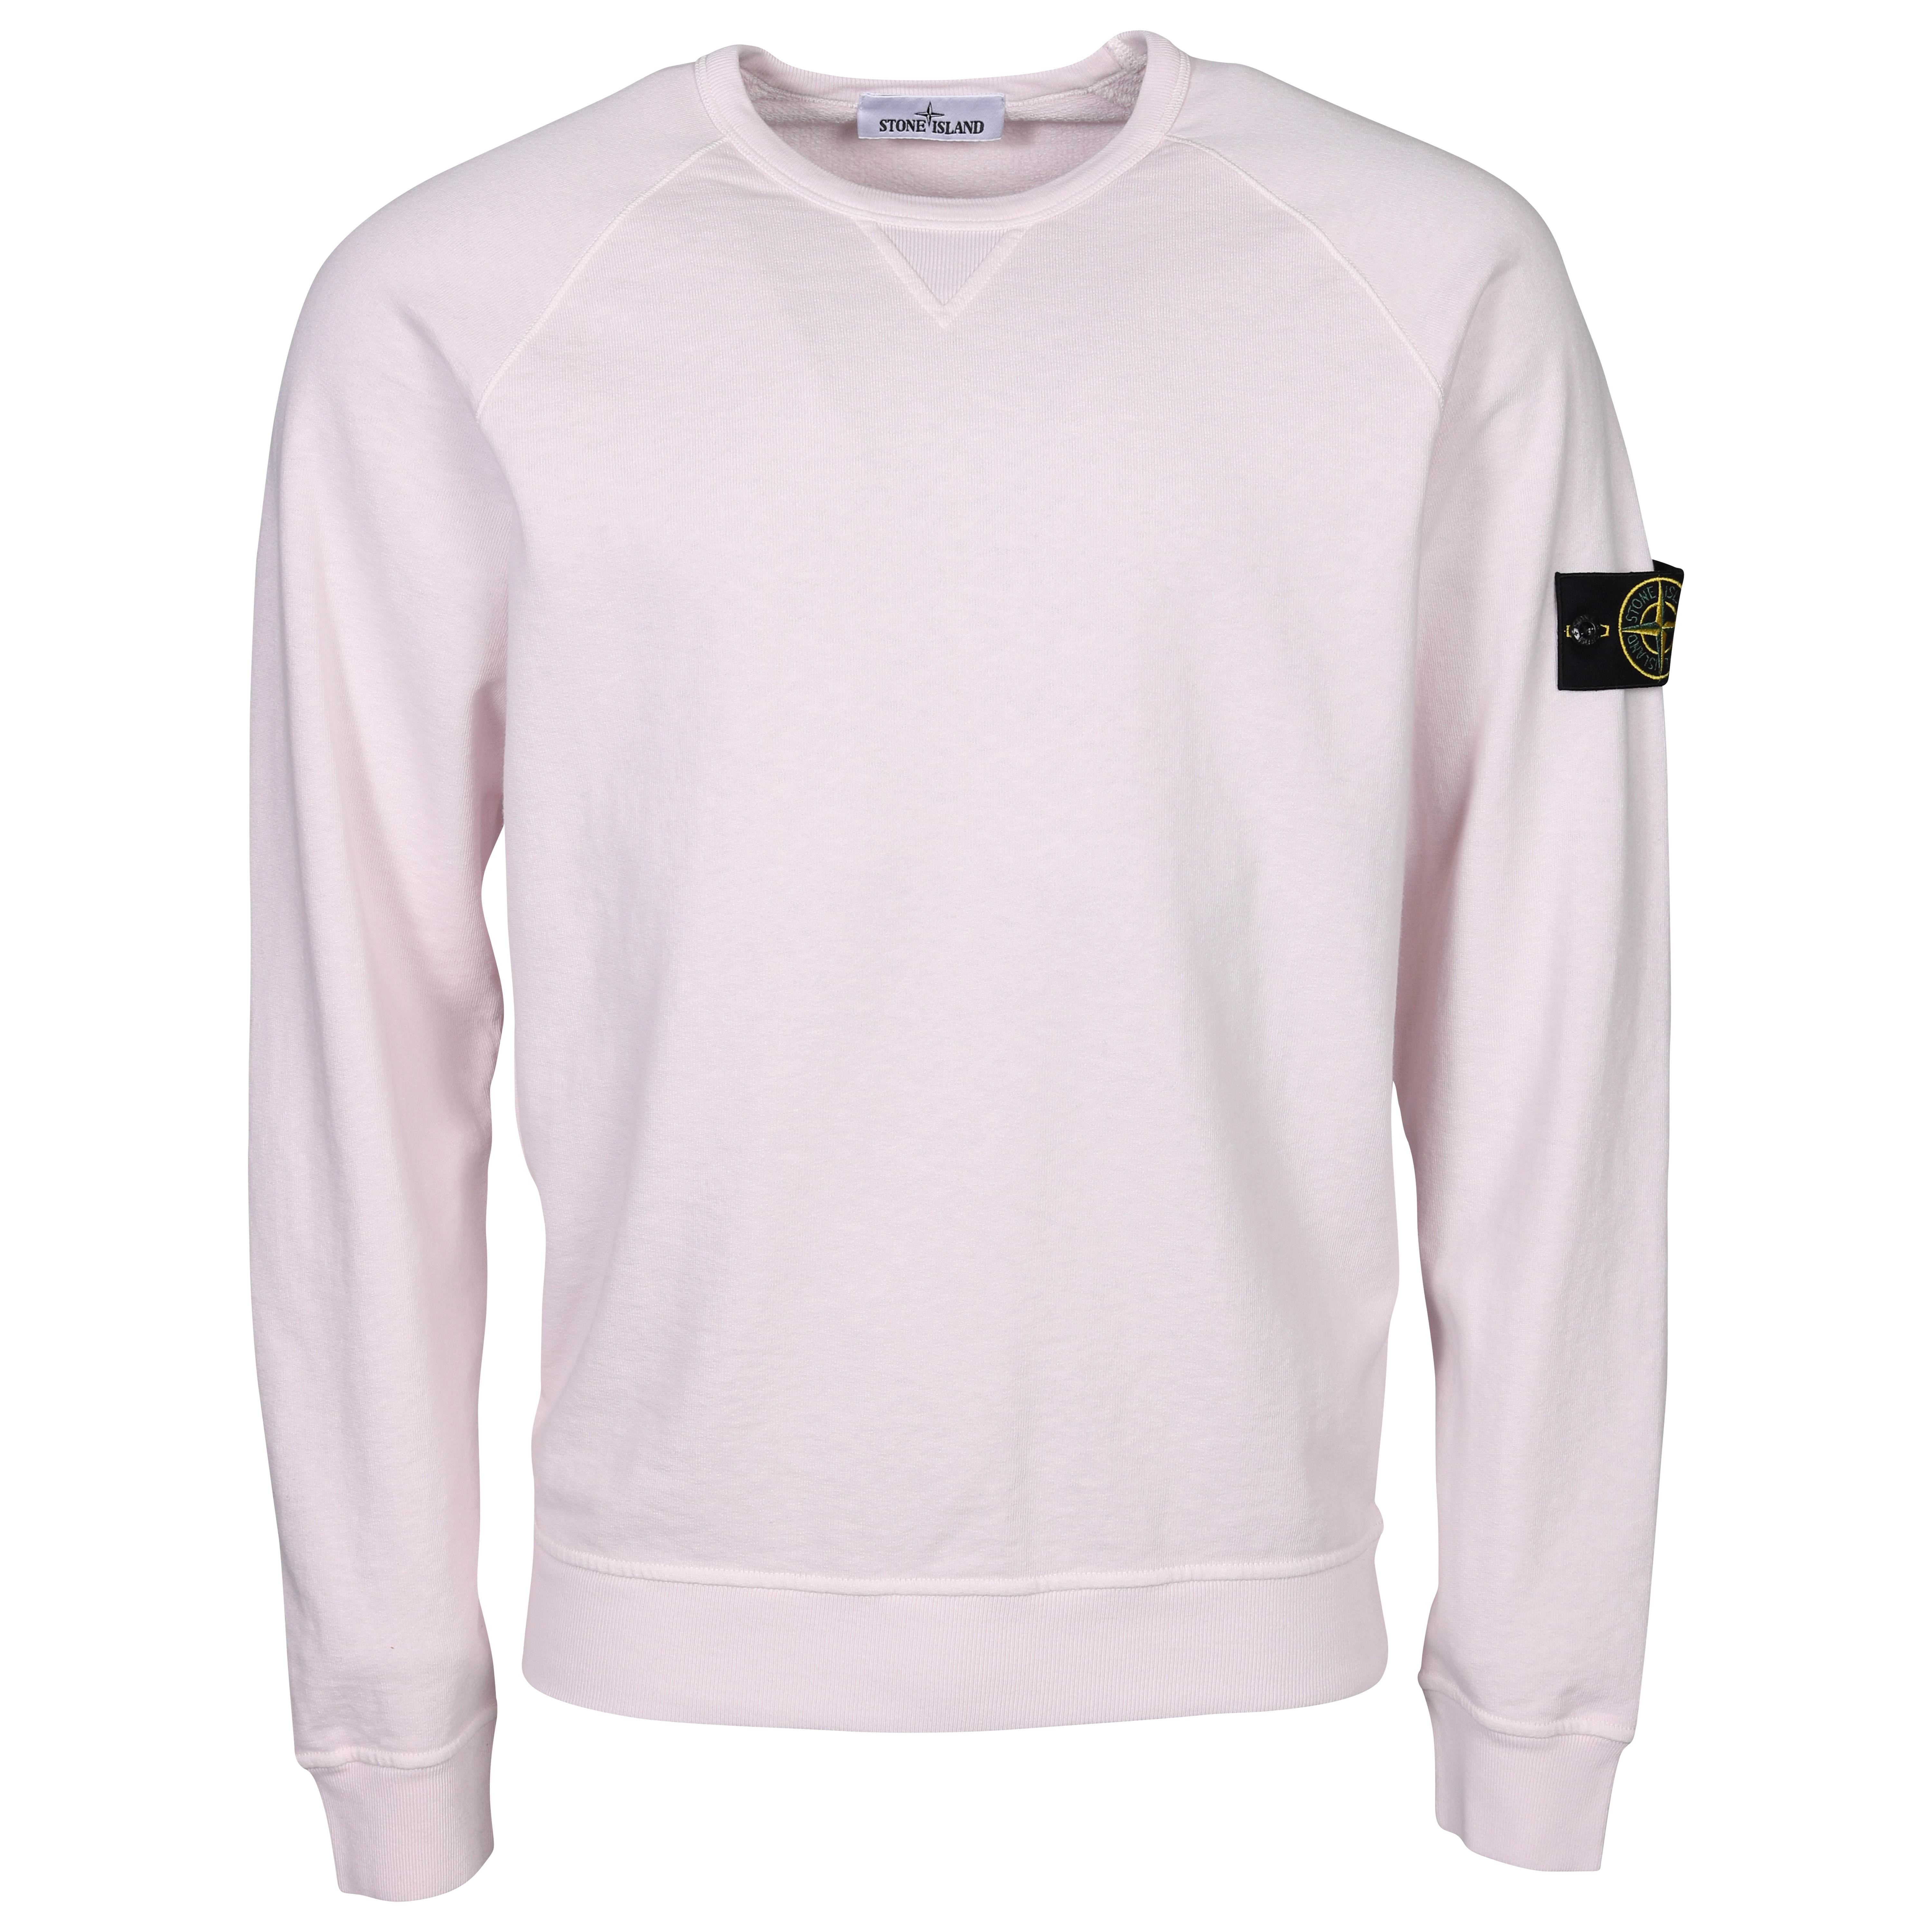 Stone Island Sweatshirt in Washed Light Pink M